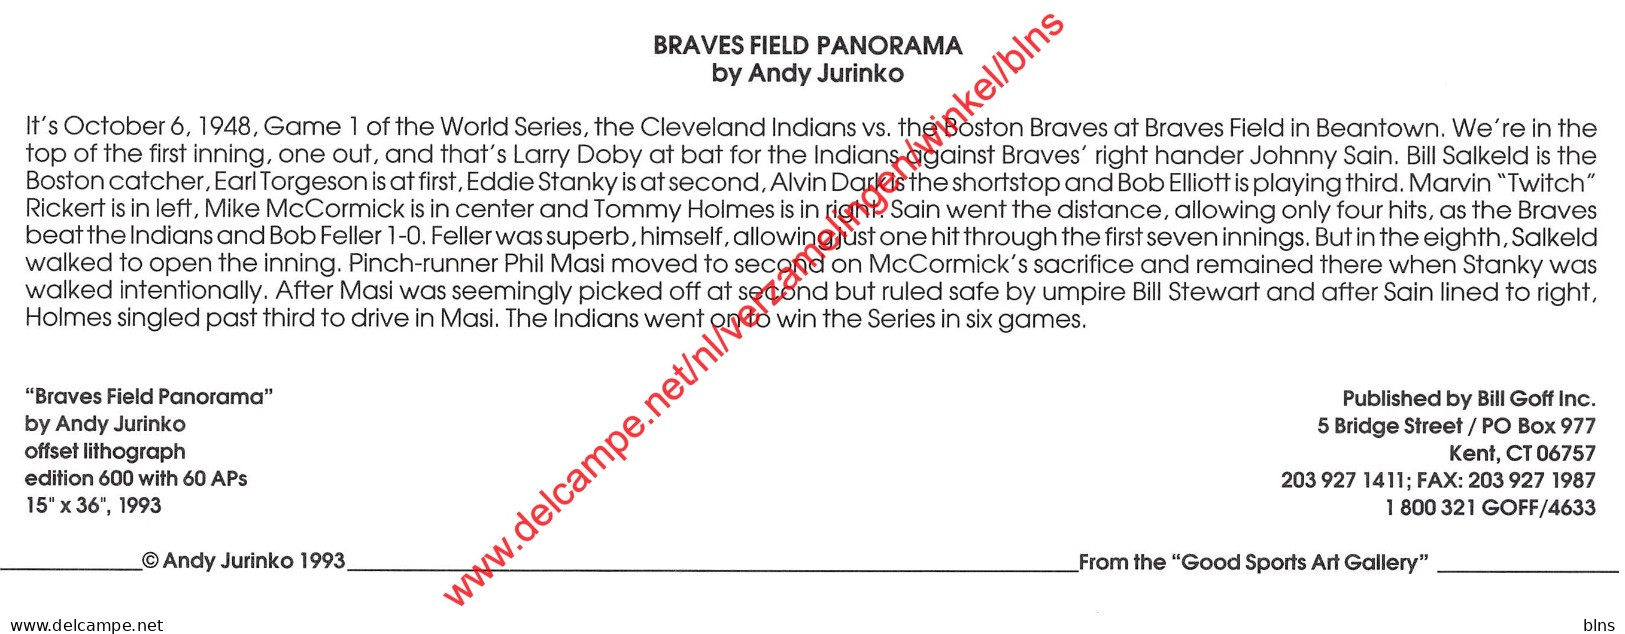 Braves Field Panorama By Andy Jurinko - Baseball - 23x9cm - Baseball